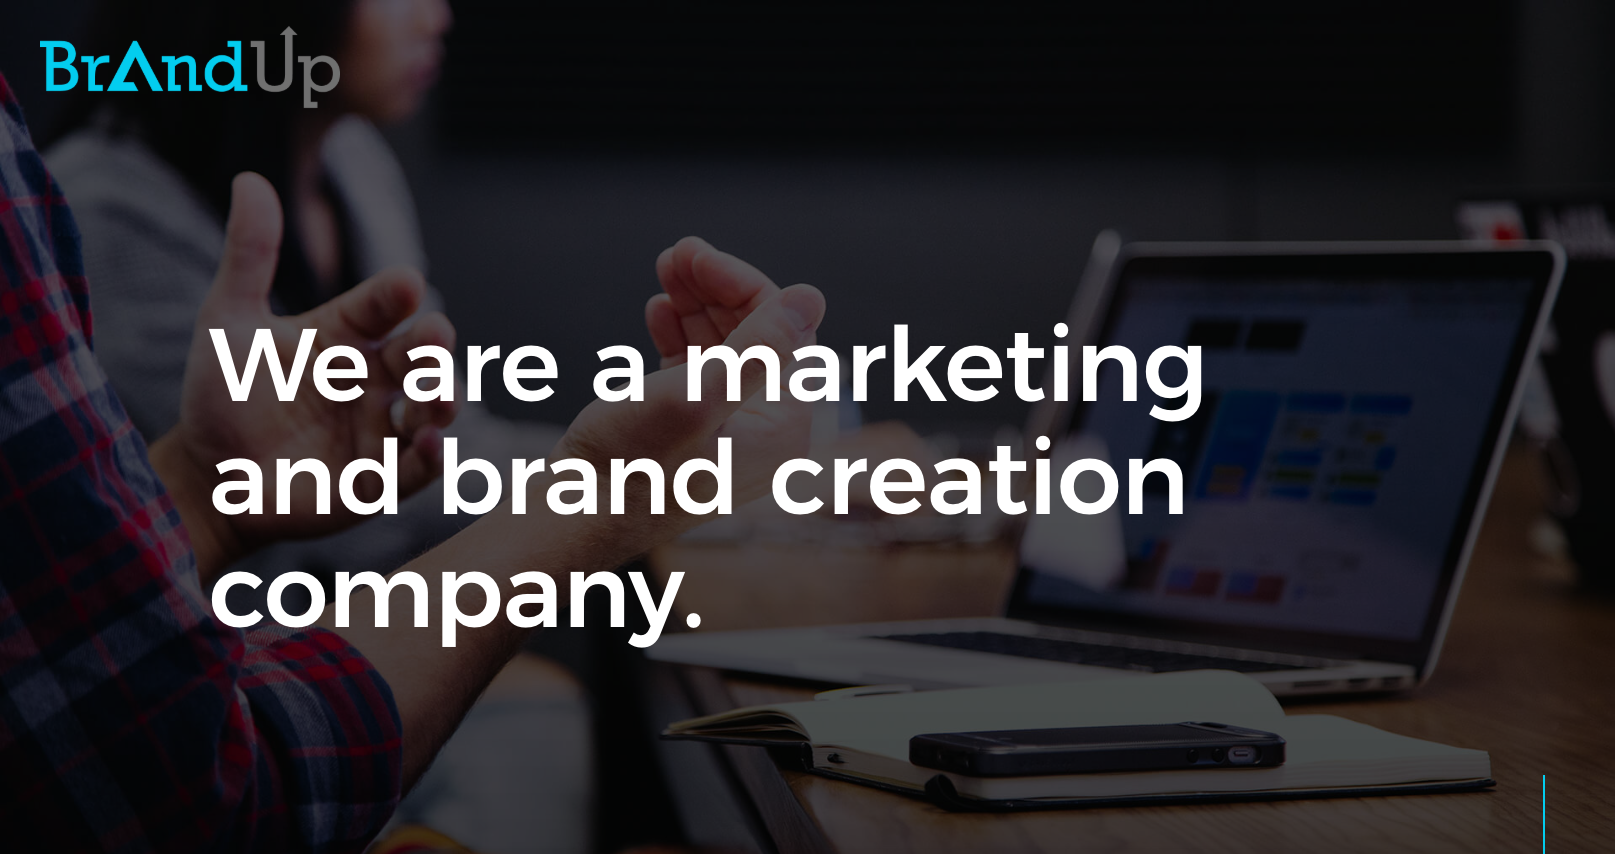 BrandUp - A Marketing and Brand Creation Company